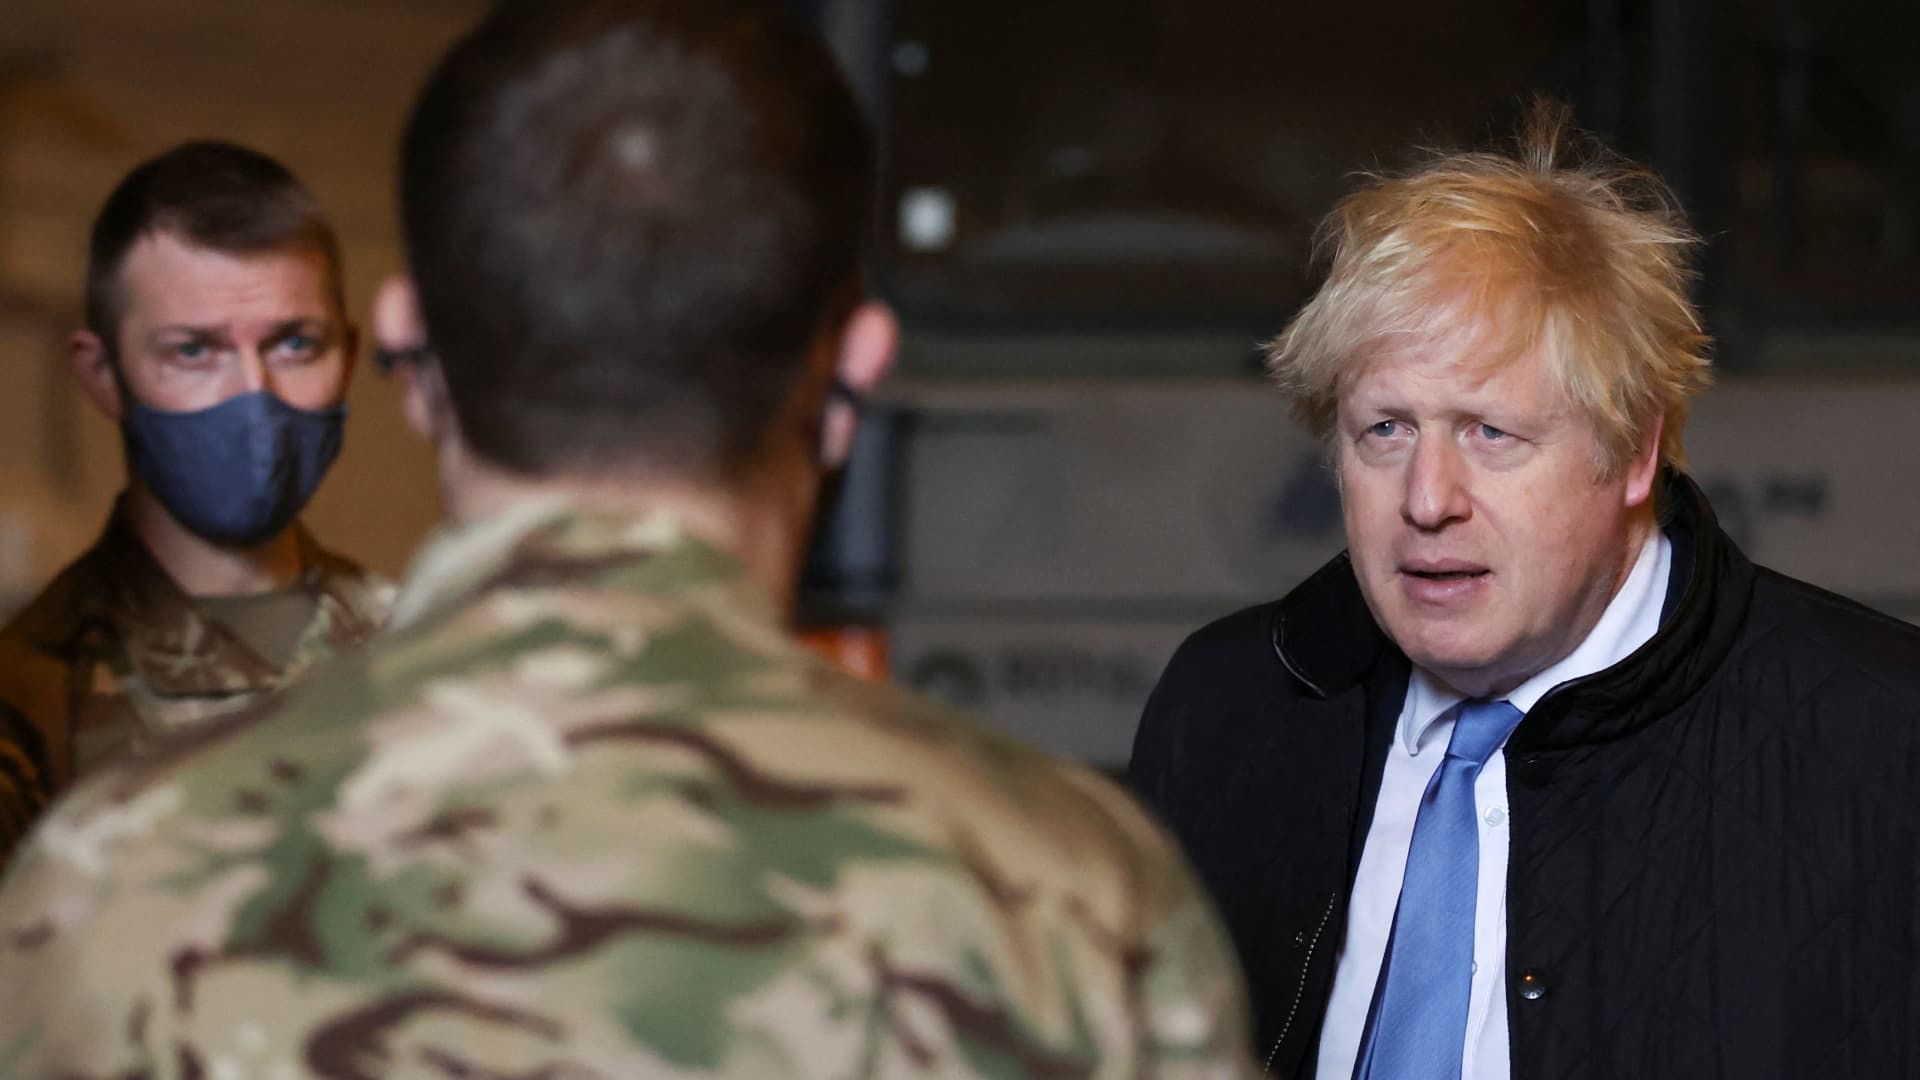 British Prime Minister Boris Johnson arrives at Royal Air Force Station Waddington, in Waddington, Lincolnshire, Britain February 17, 2022.